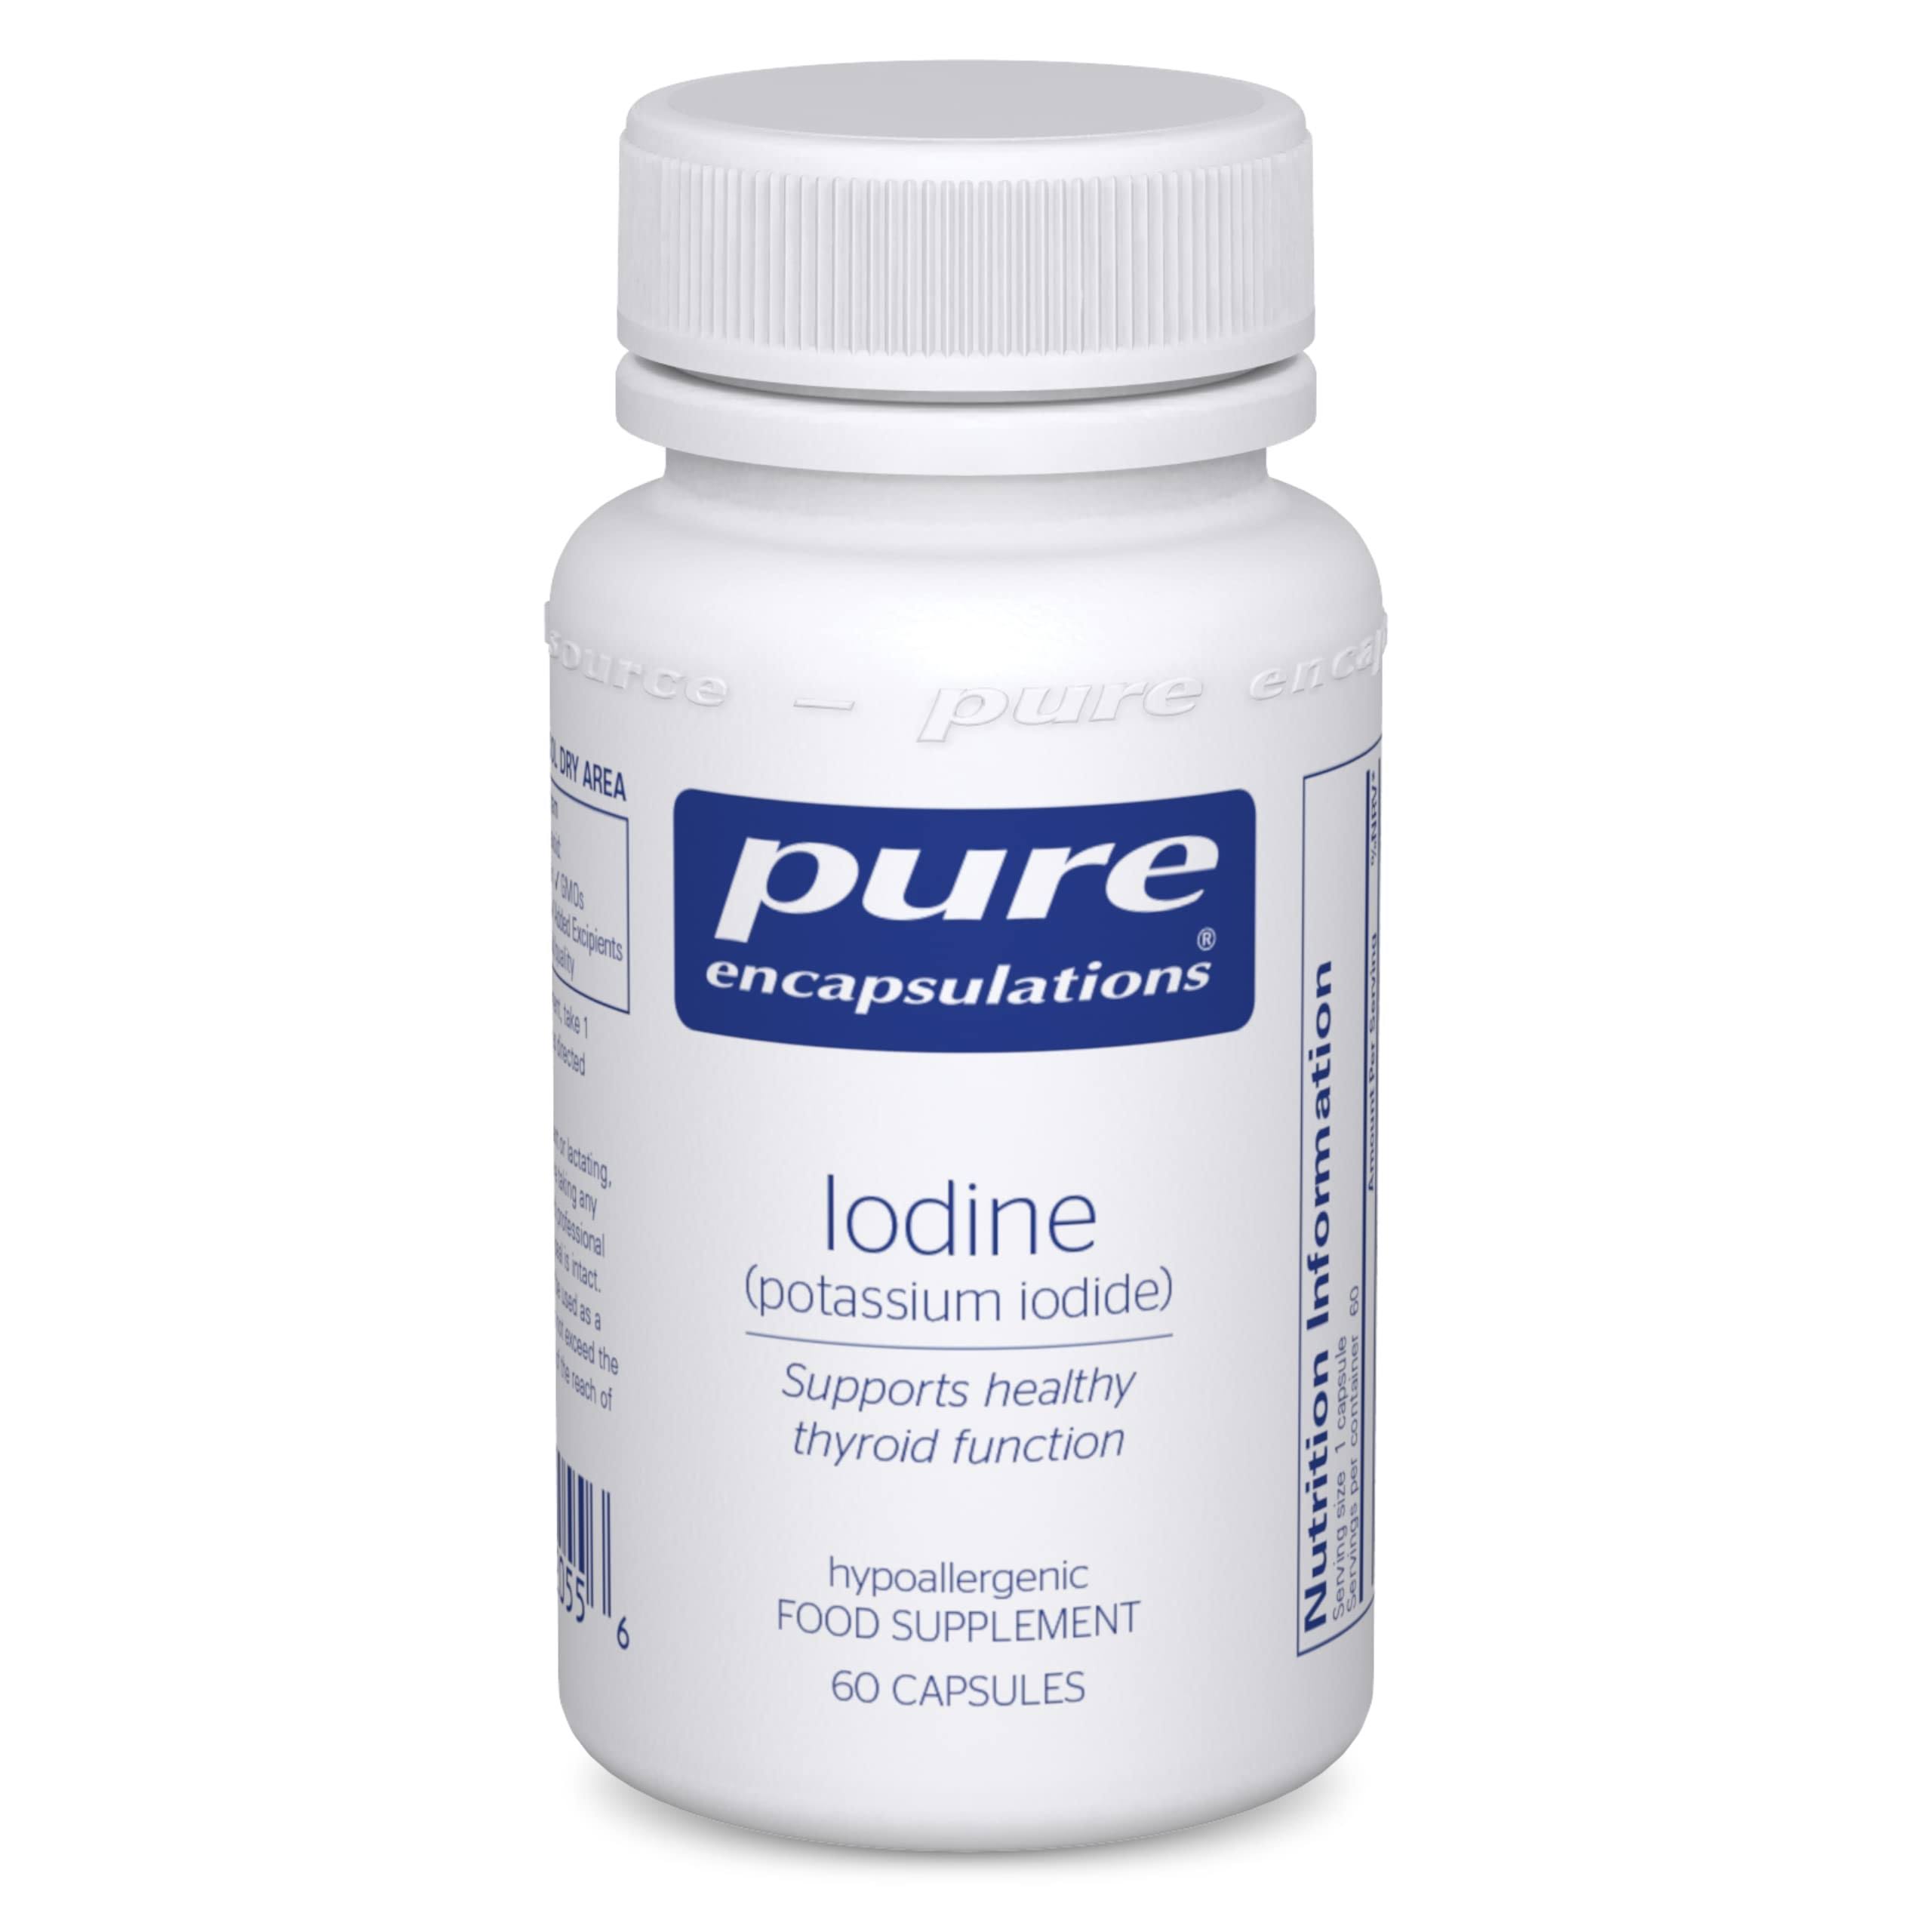 Pure Encapsulations Iodine (potassium iodide) Capsules 60